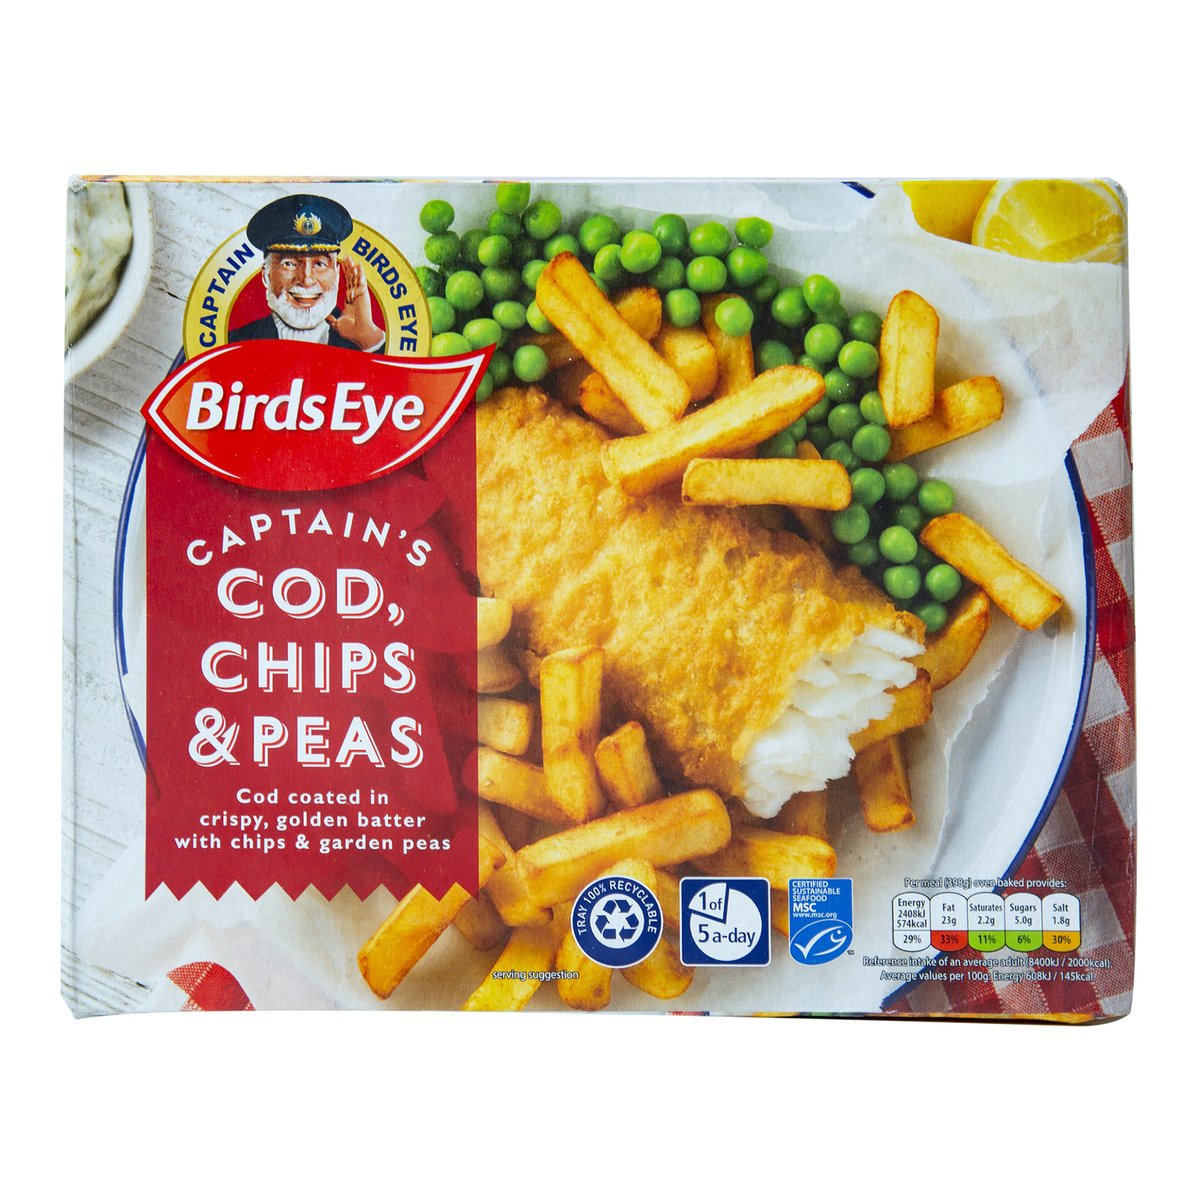 Birds Eye Cod, Chips & Peas 395g